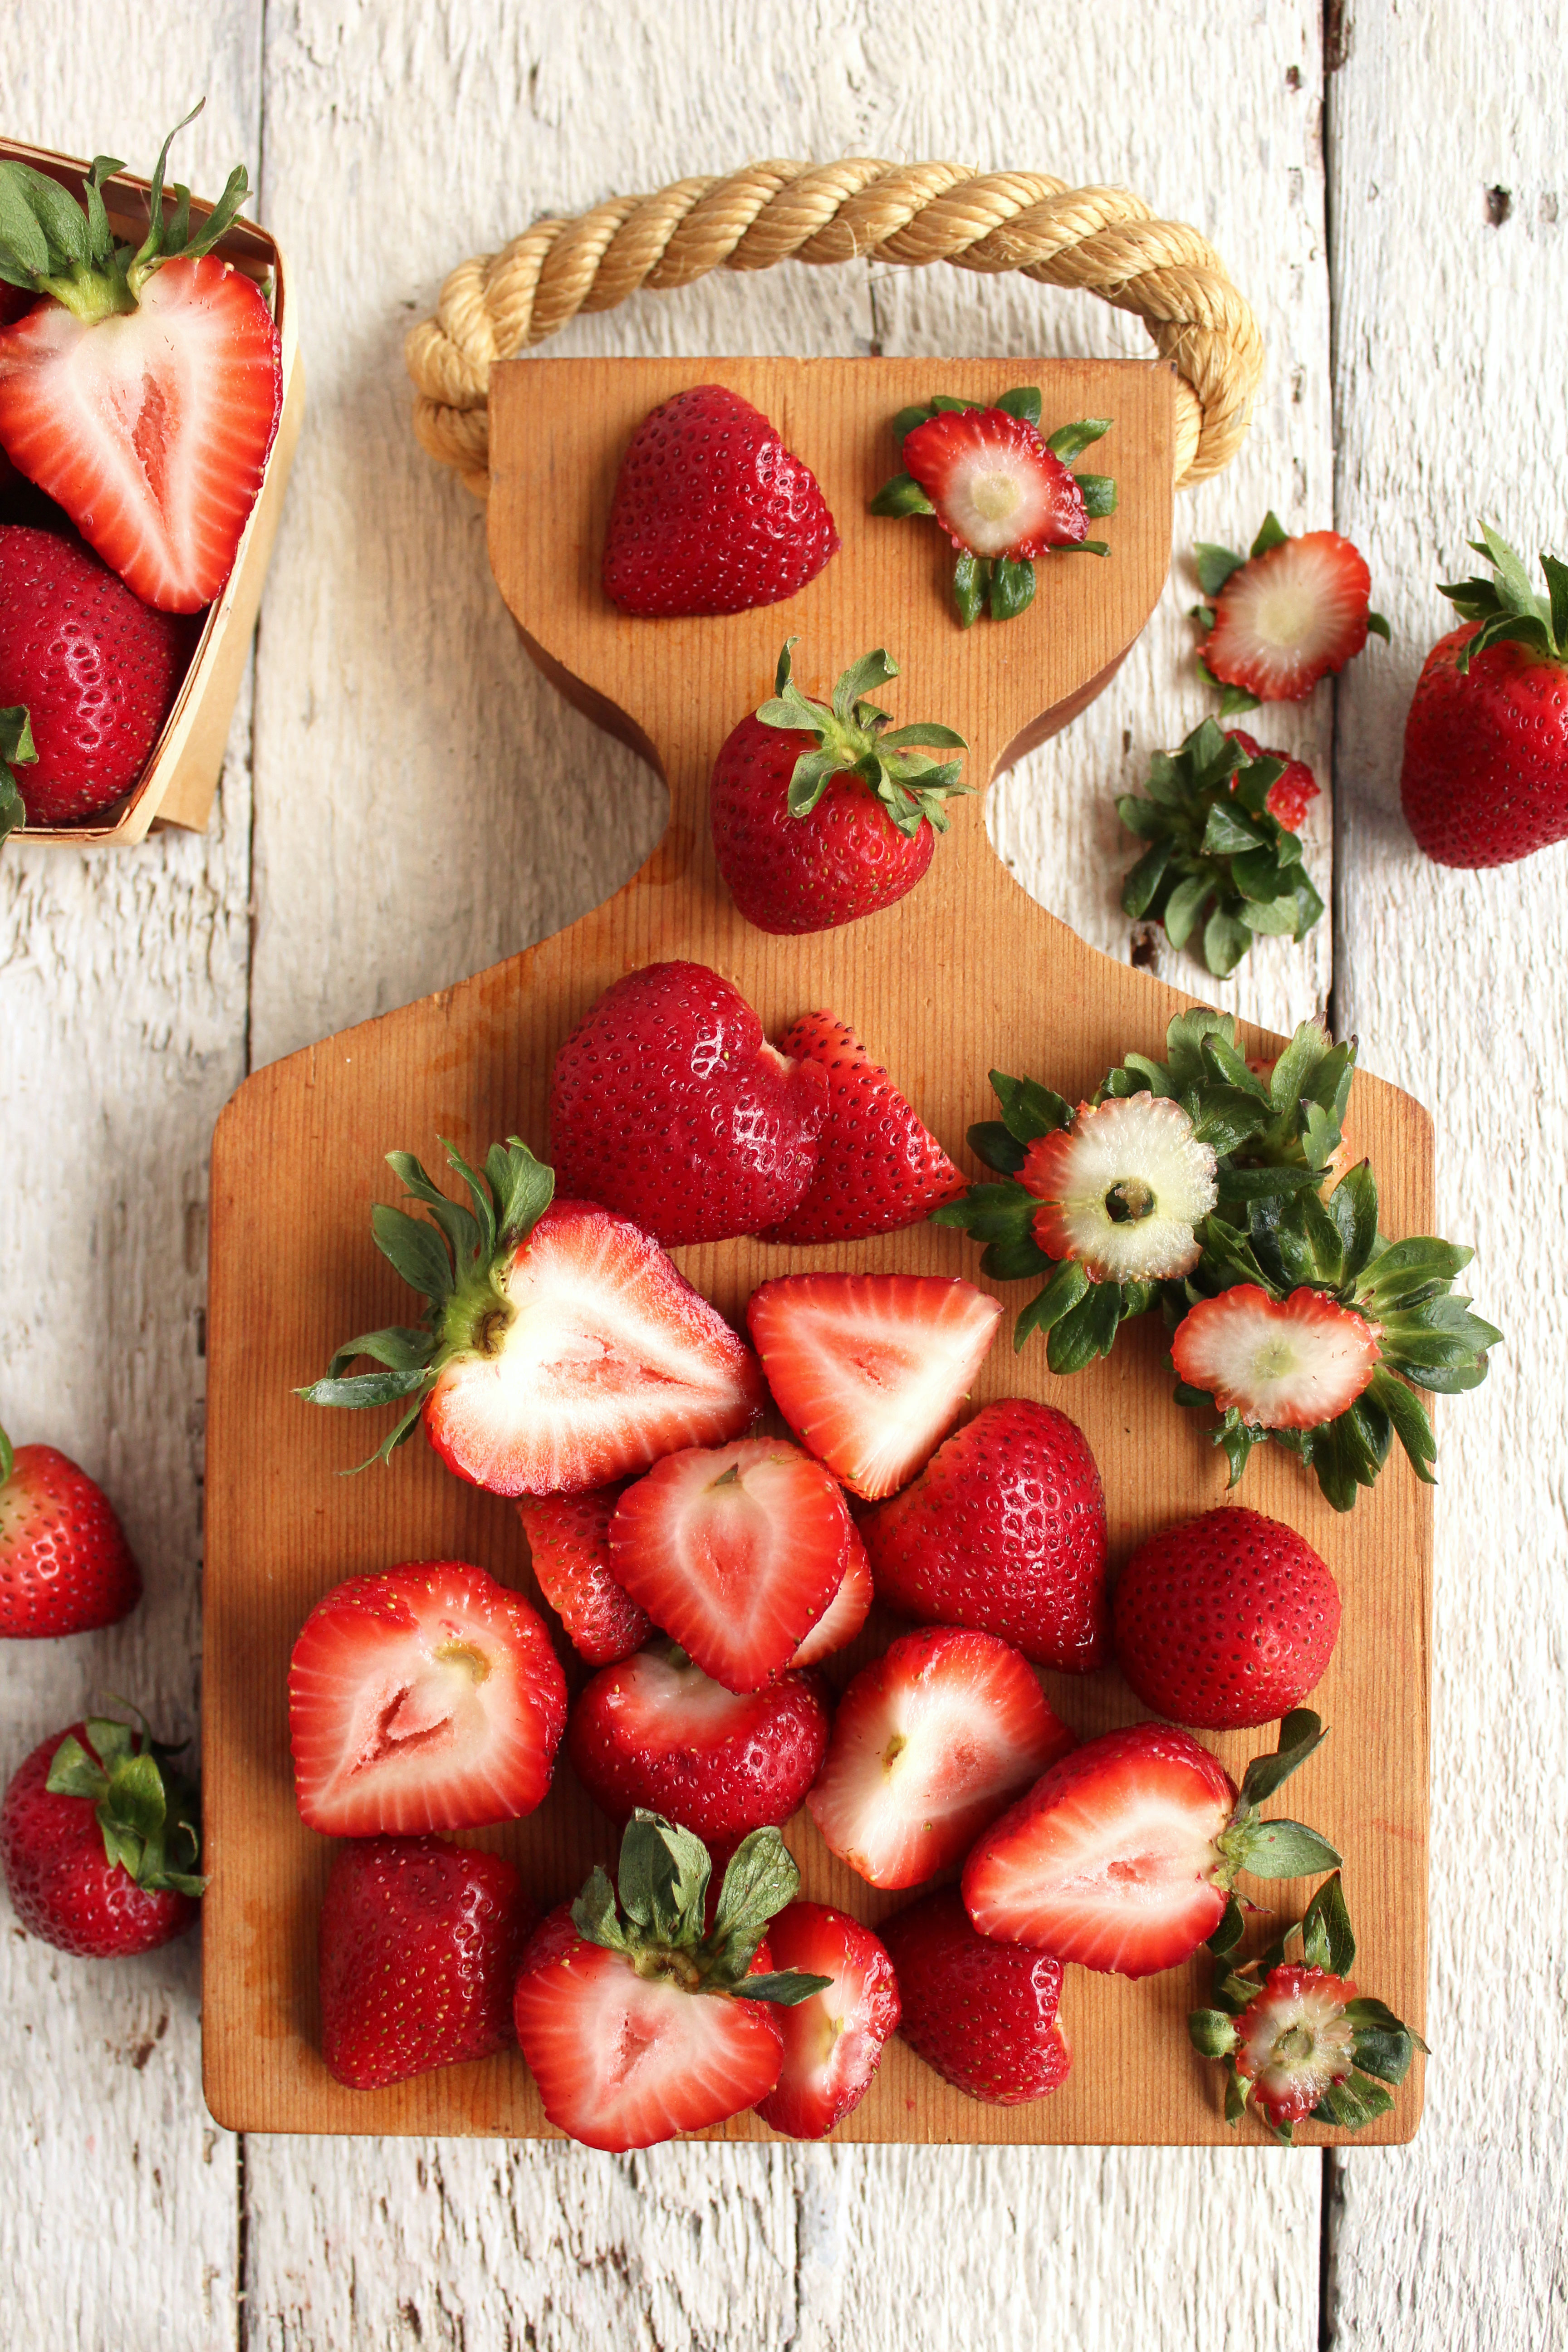 EASY Strawberry Crisp! Summer-inspired, super fruity, crispy crunchy topping, & SO DELICIOUS! #vegan #glutenfree #refinedsugarfree #strawberries #crisp | Peach and the Cobbler 